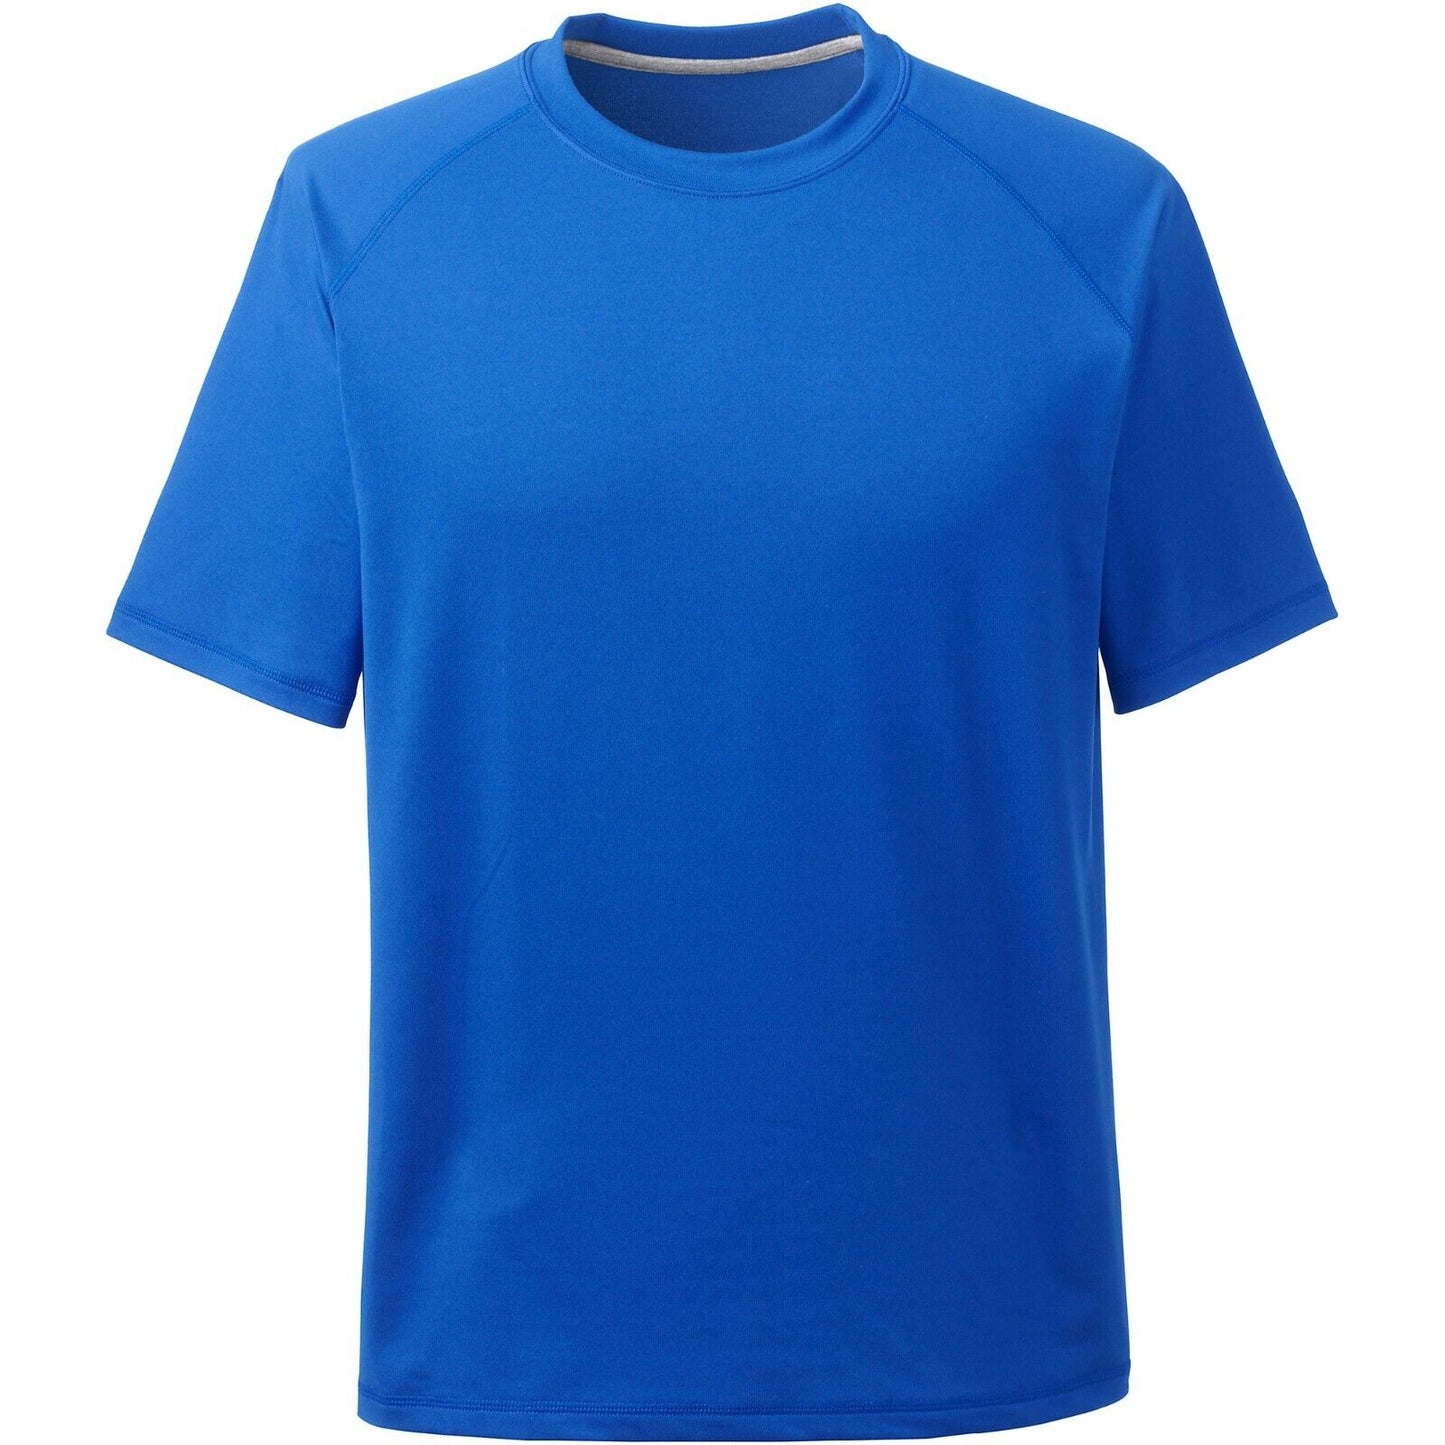 Mens Short Sleeve Active Gym T shirt Size M